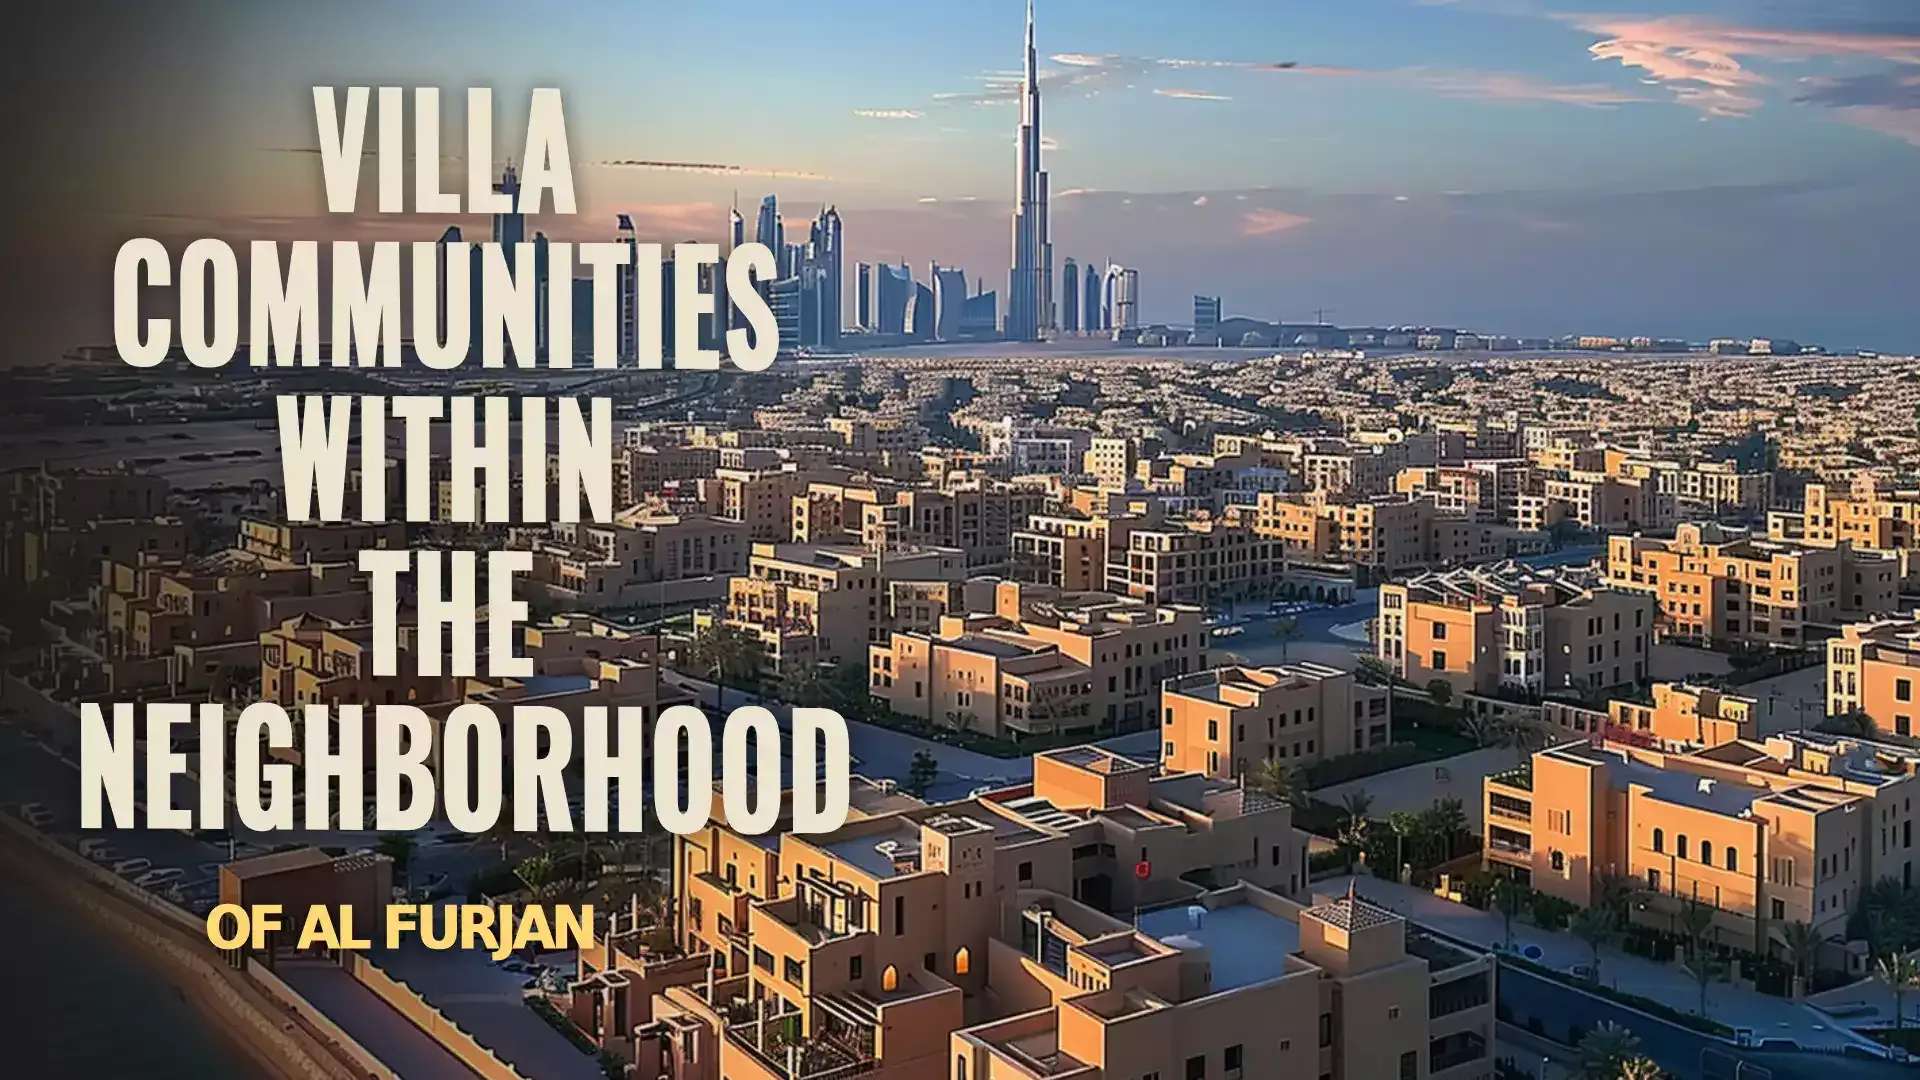 Aerial view of Al Furjan's Villa Communities showcasing its residential charm